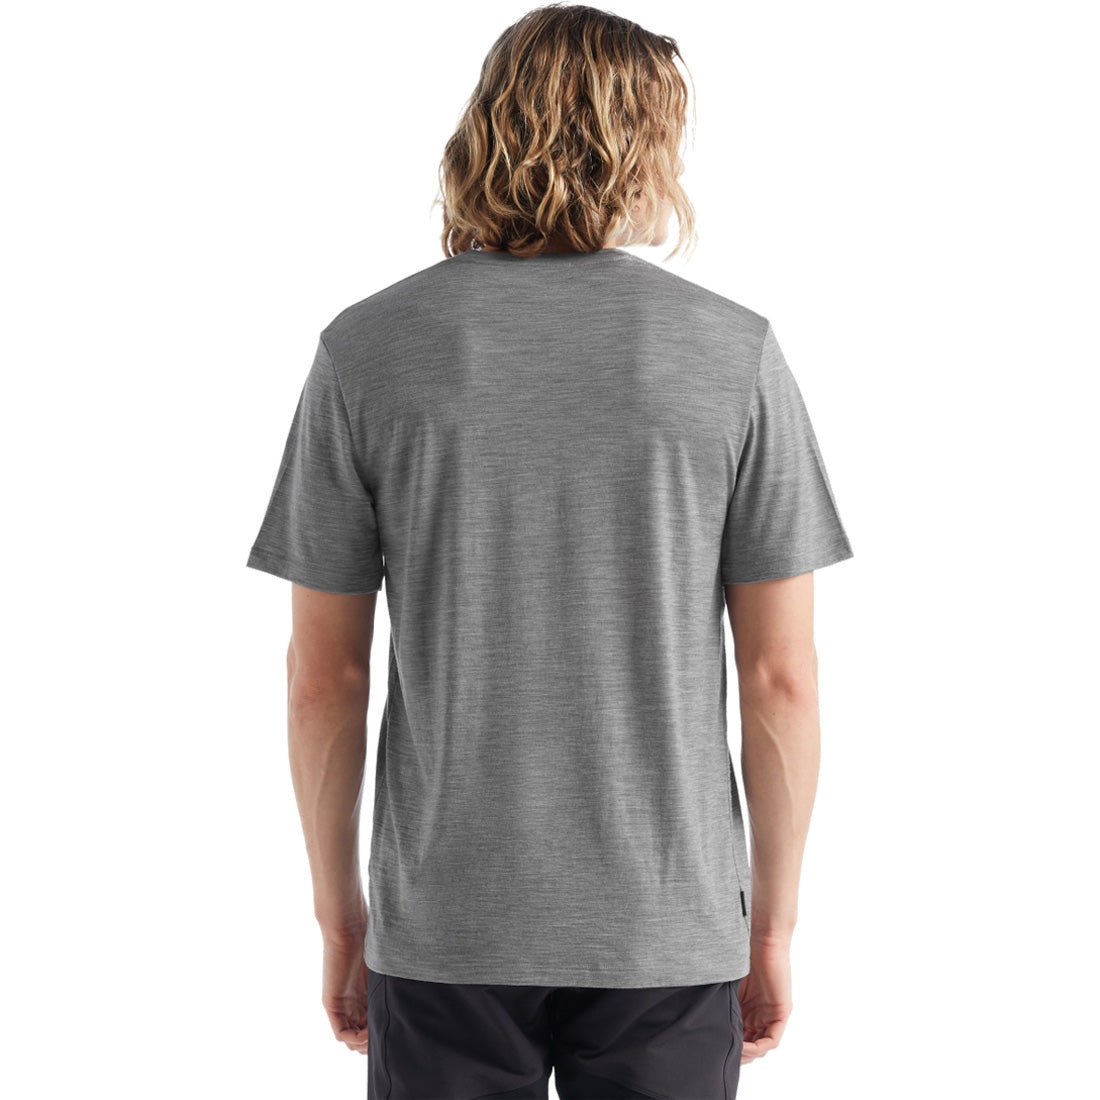 Icebreaker Merino Tech Lite II Short Sleeve T-Shirt Trailhead - Men's